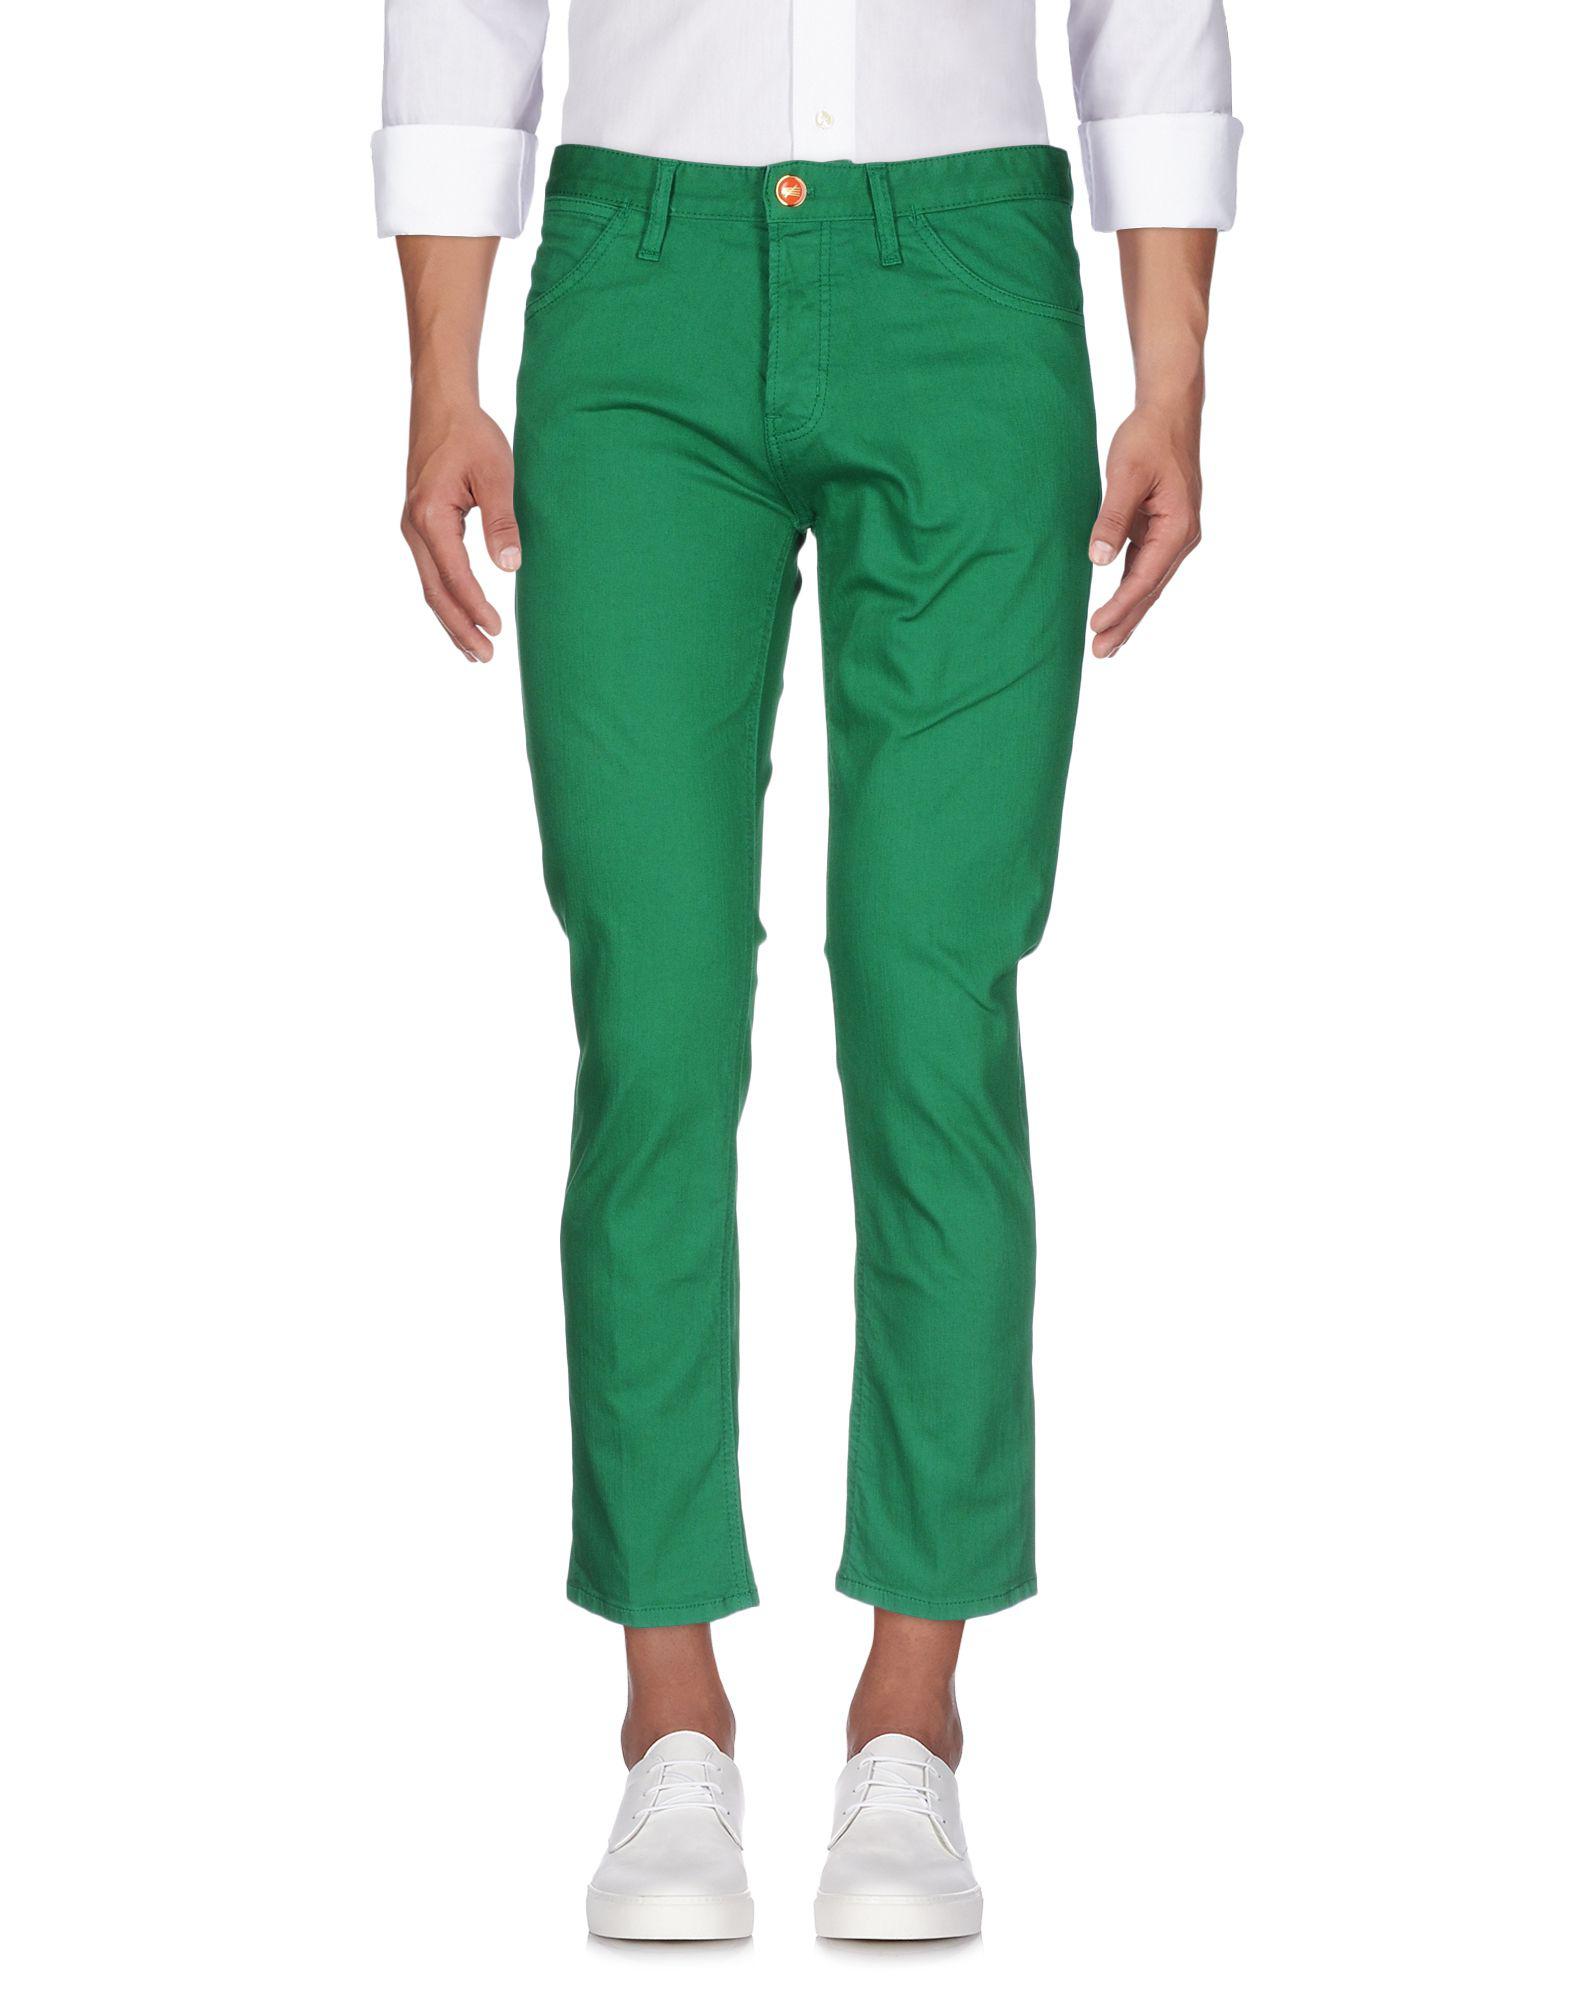 Pt05 Denim Pants in Emerald Green (Green) for Men - Lyst